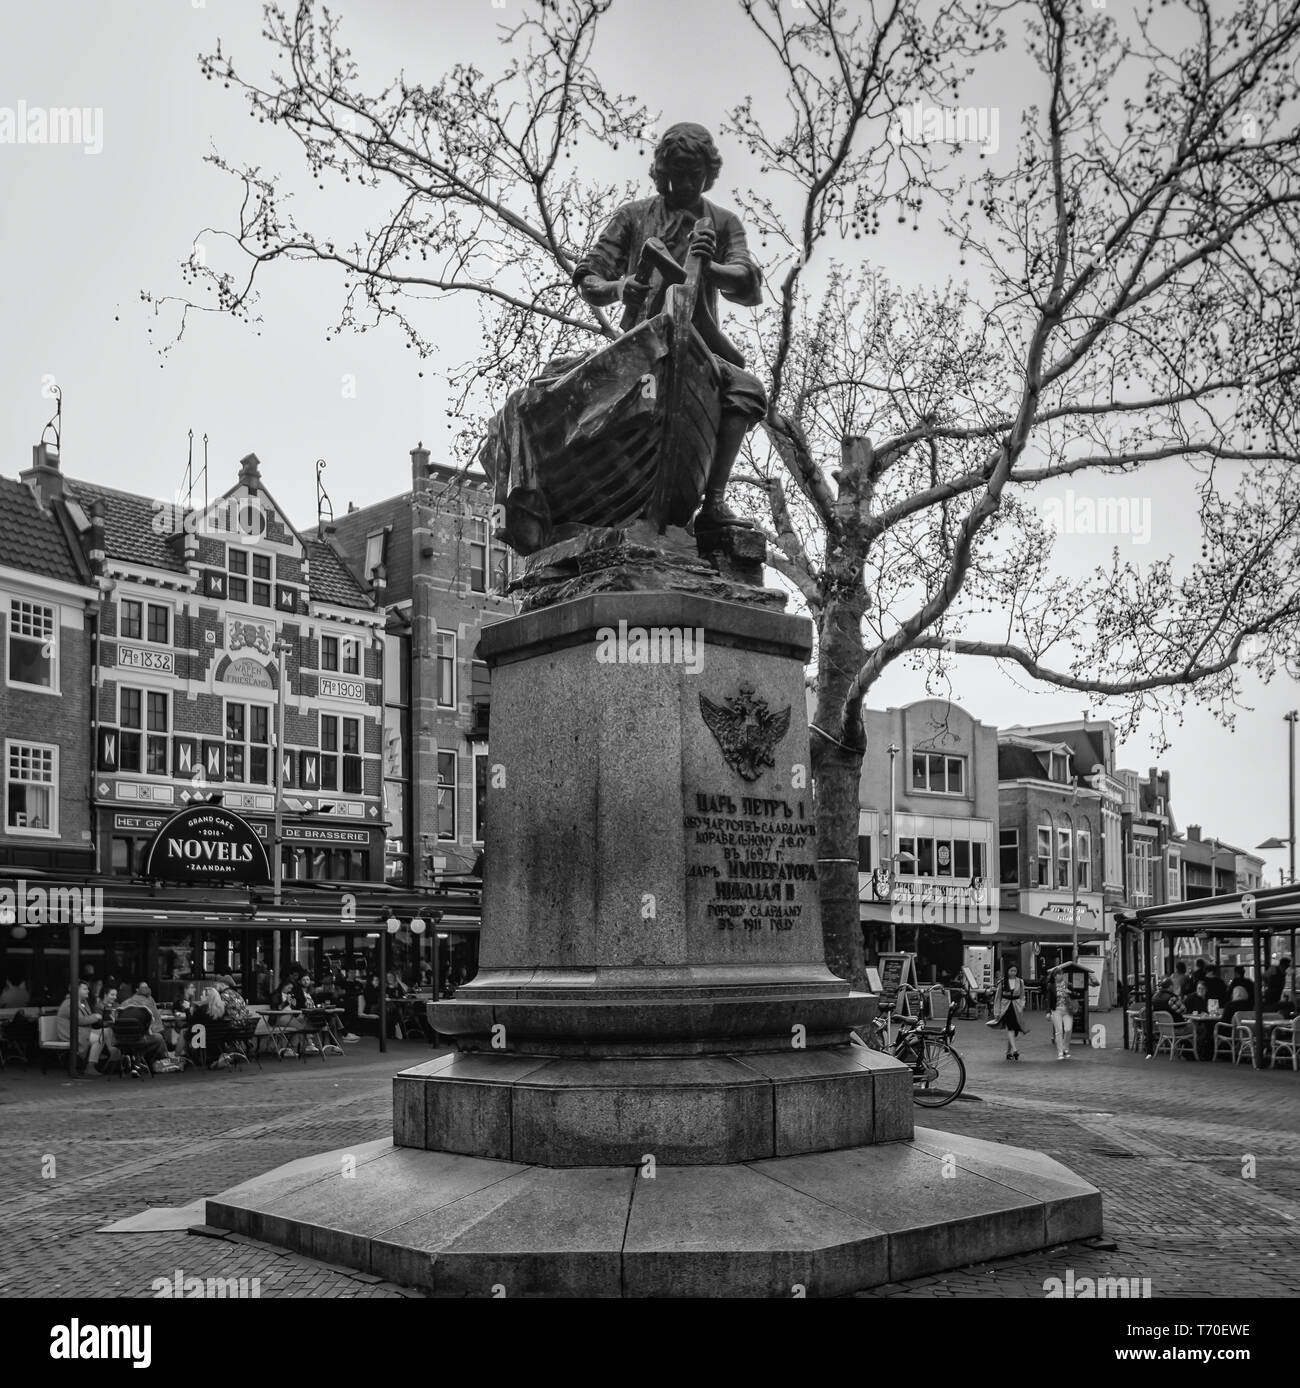 Zaandam, The Netherlands, April 18, 2019: Black and white photo of the Tsar Peter statue in the center of Zaandam Stock Photo